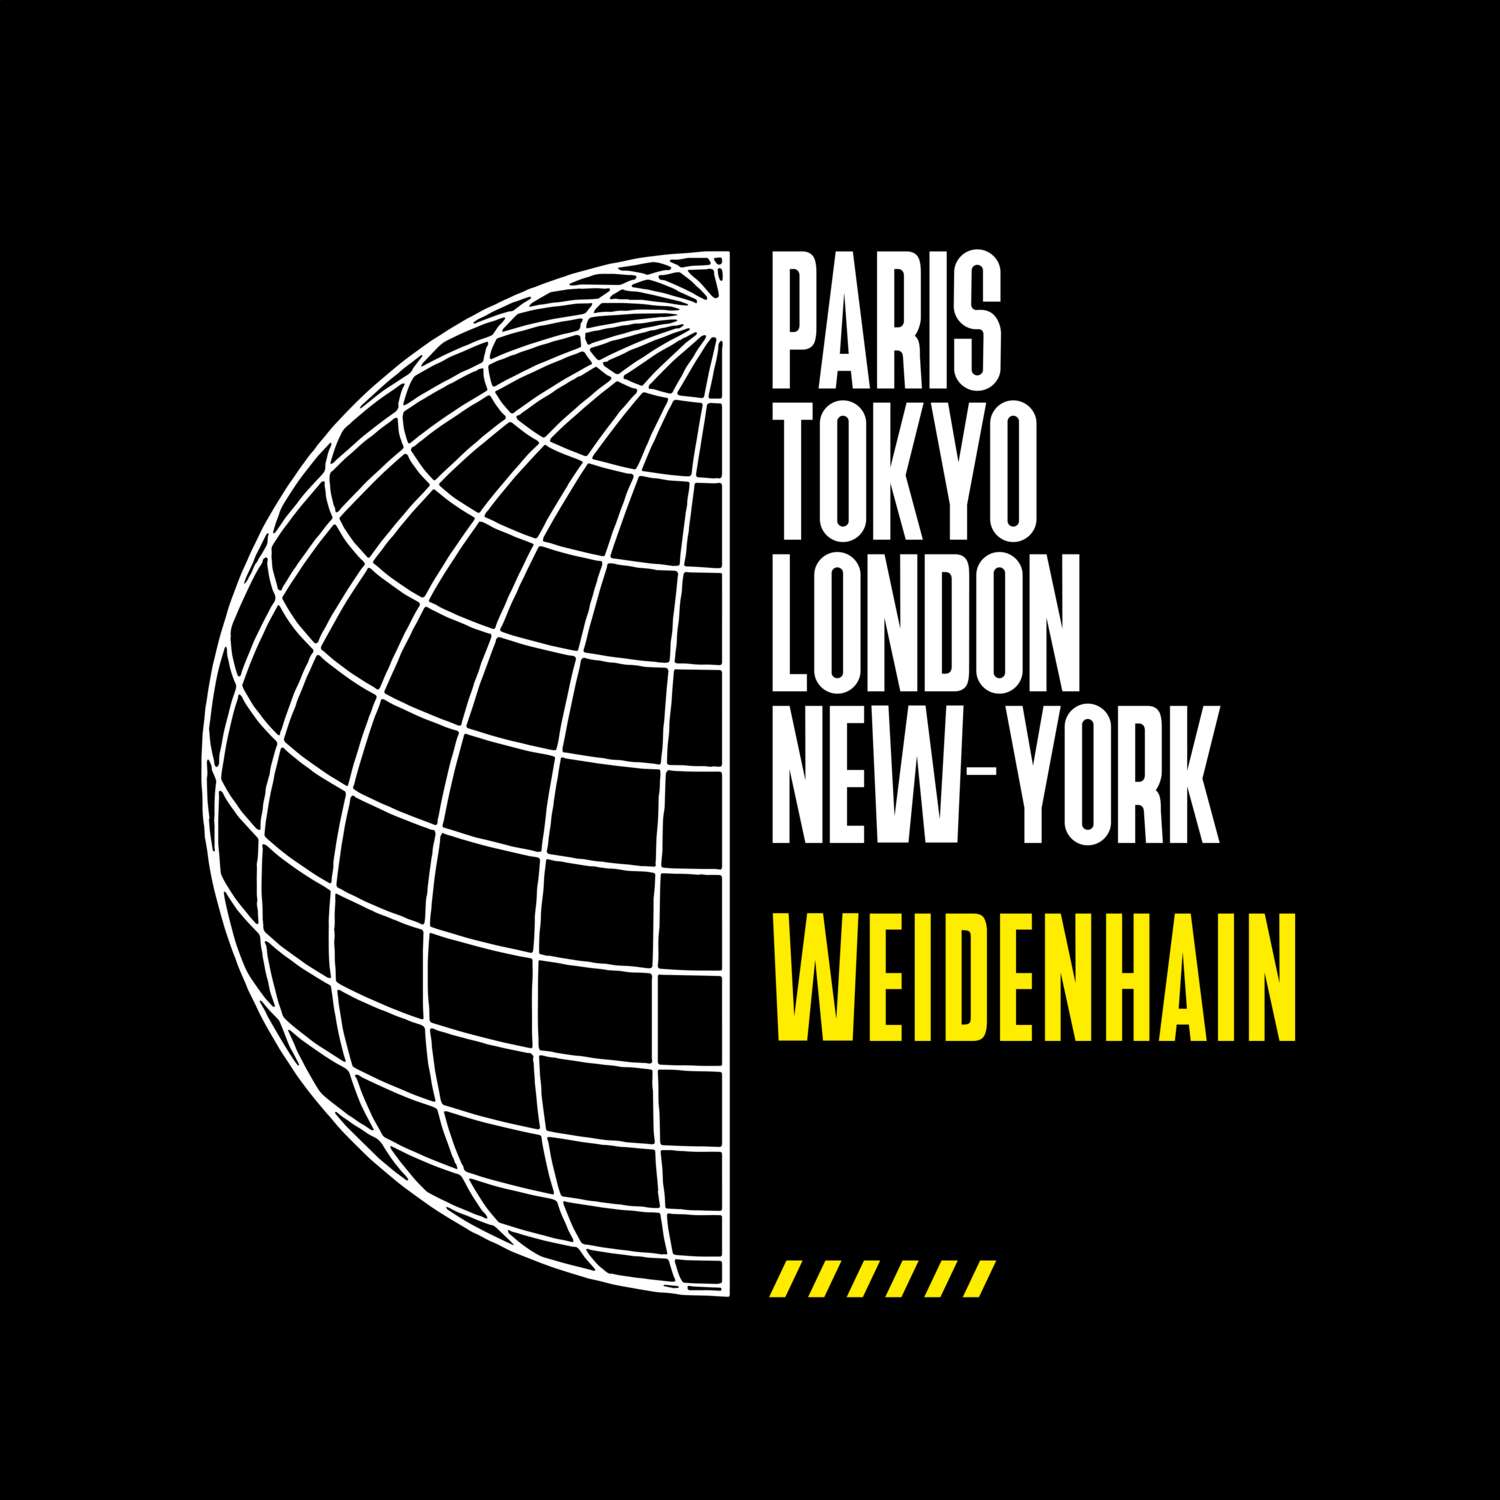 Weidenhain T-Shirt »Paris Tokyo London«